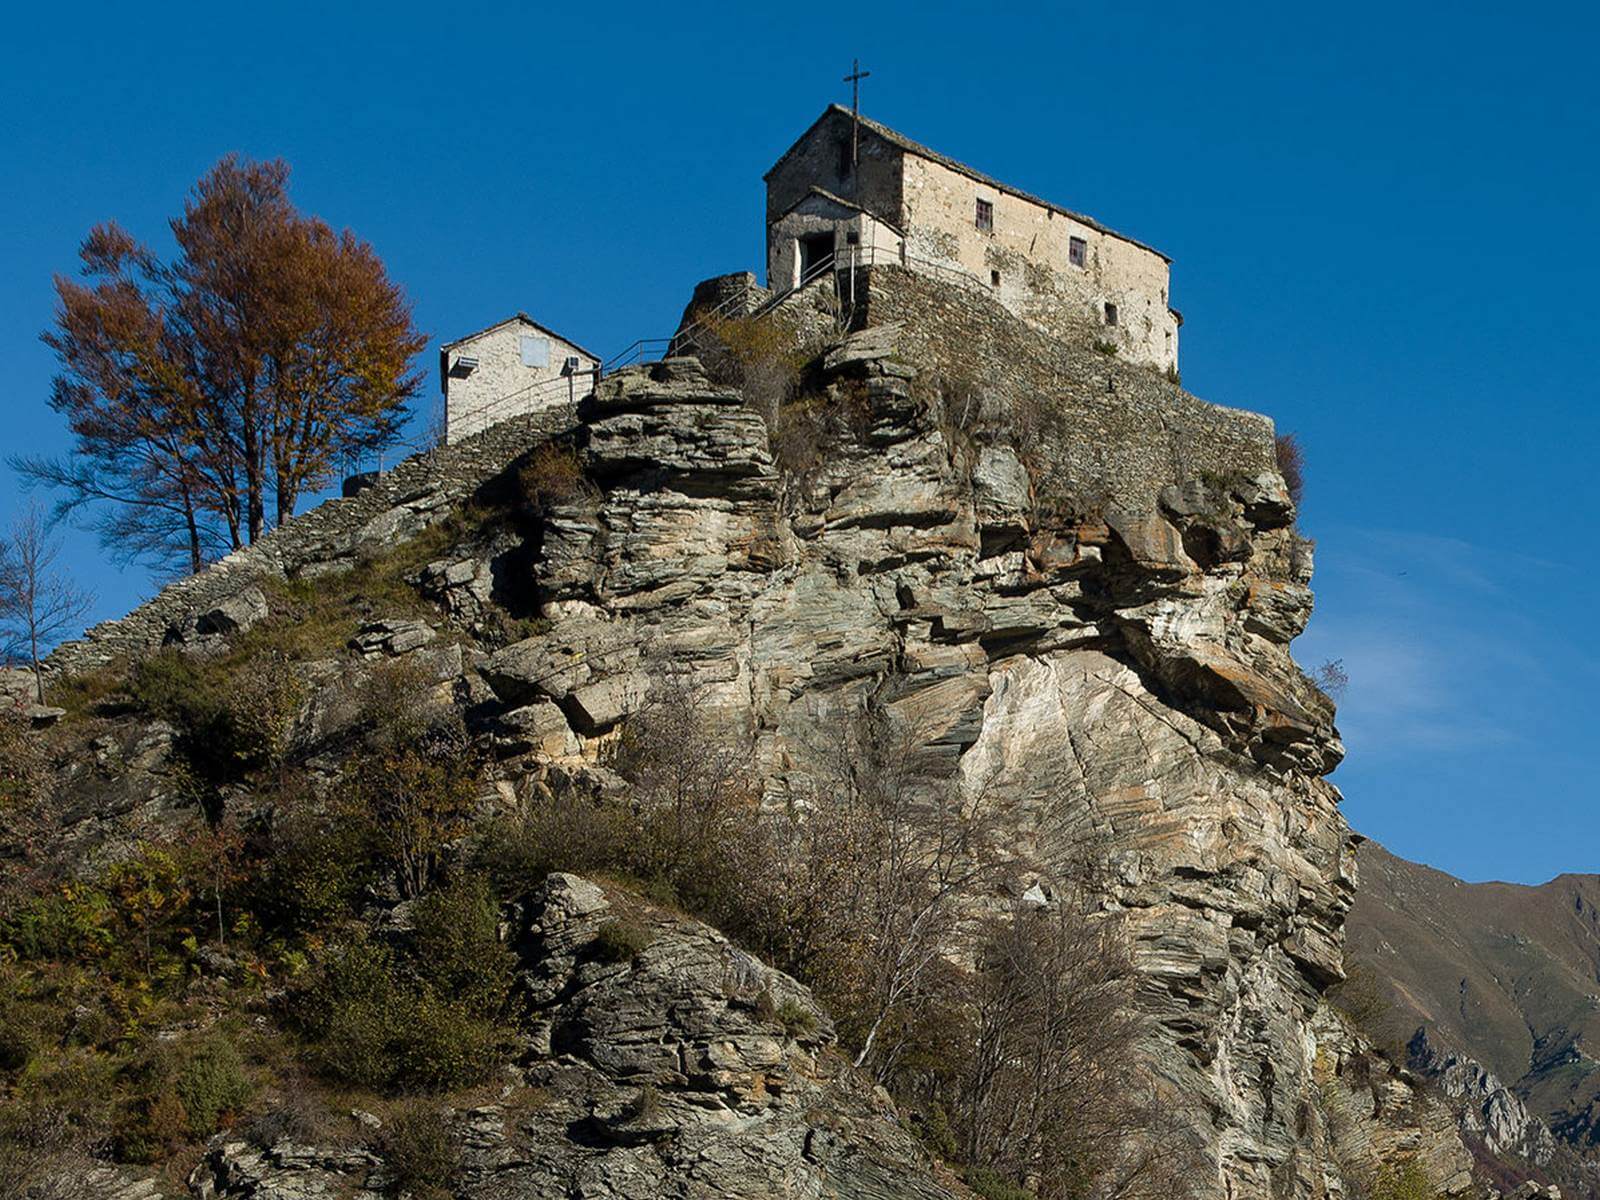 Foto: Das Santuario di Santa Cristina auf steilem Felssporn  Matthias Mandler - Lupe Reisen